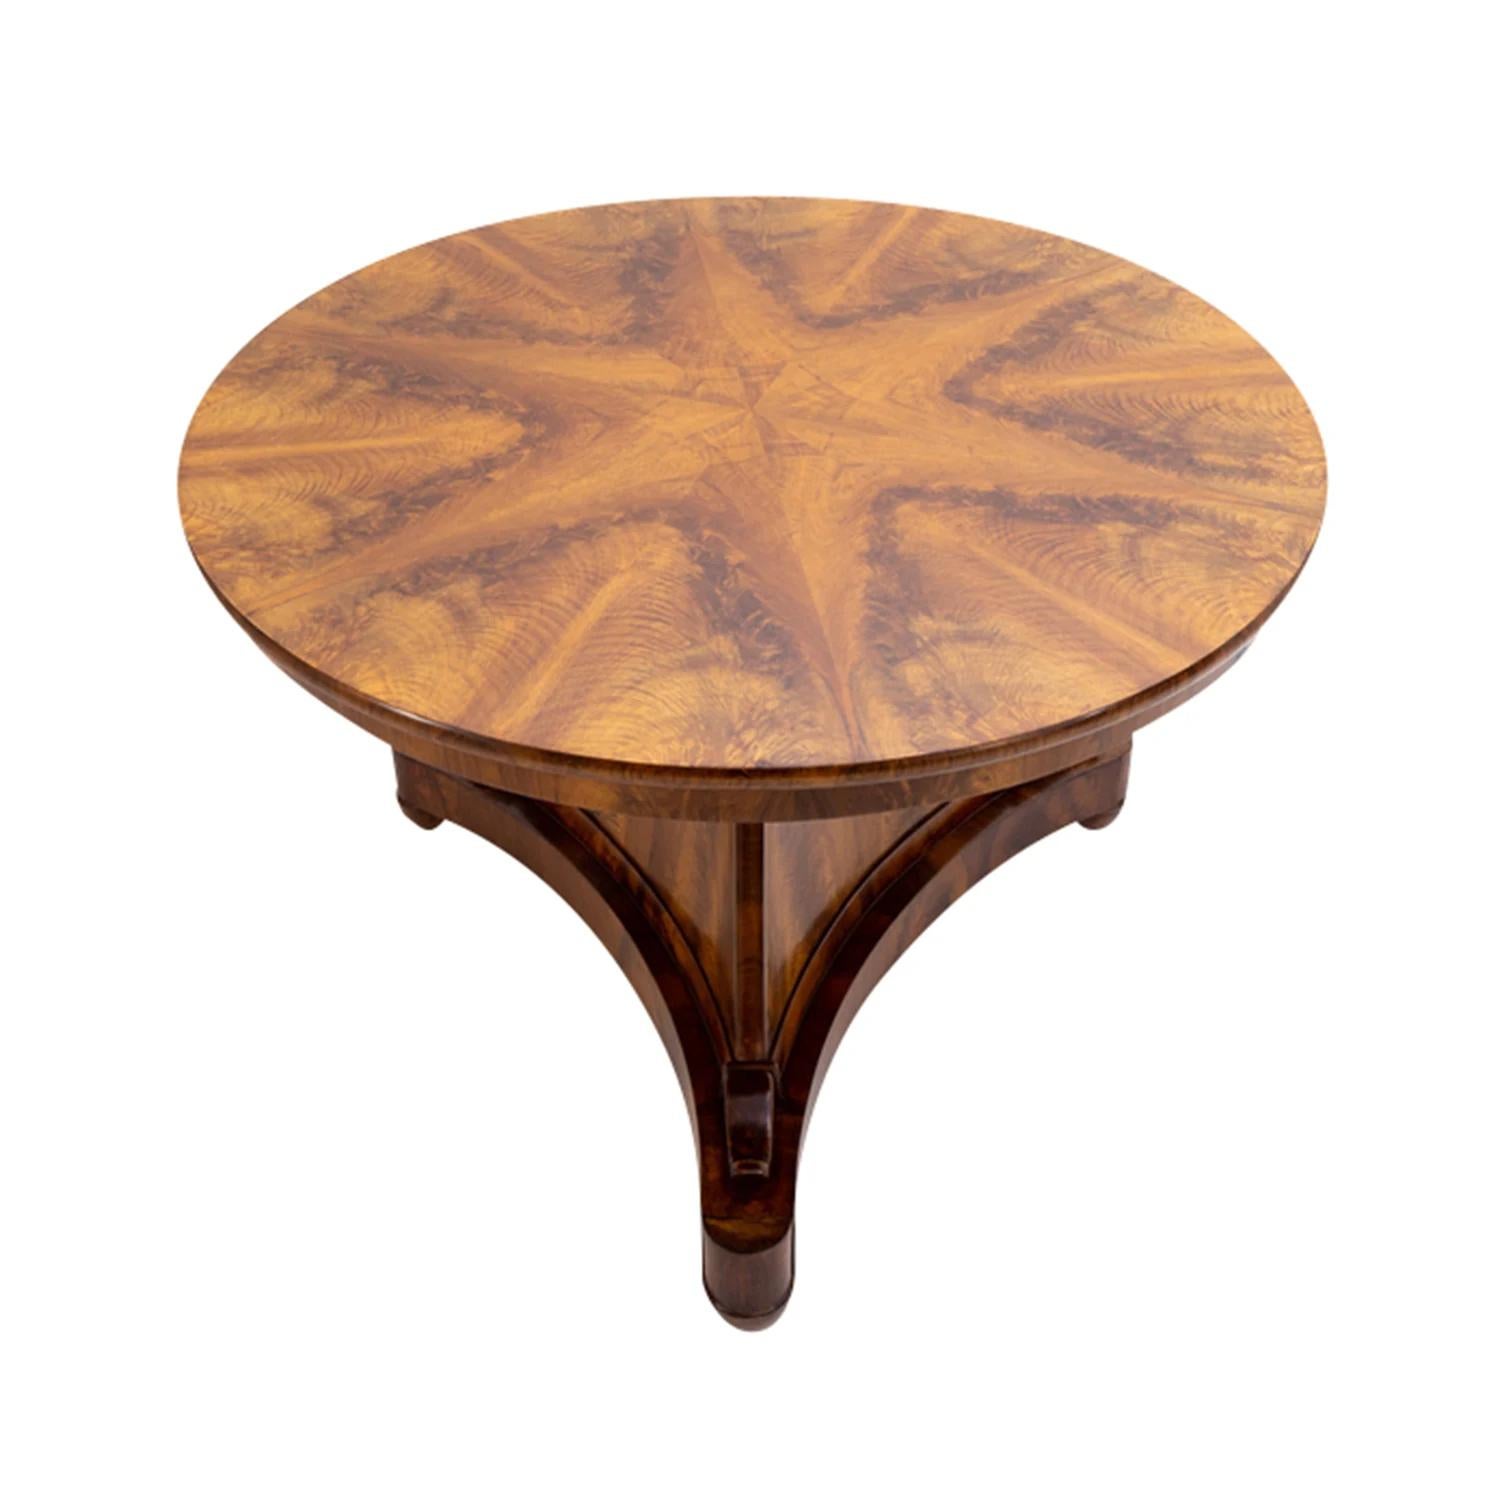 19th Century German Biedermeier Polished Walnut Foldable, Antique Center Table For Sale 2